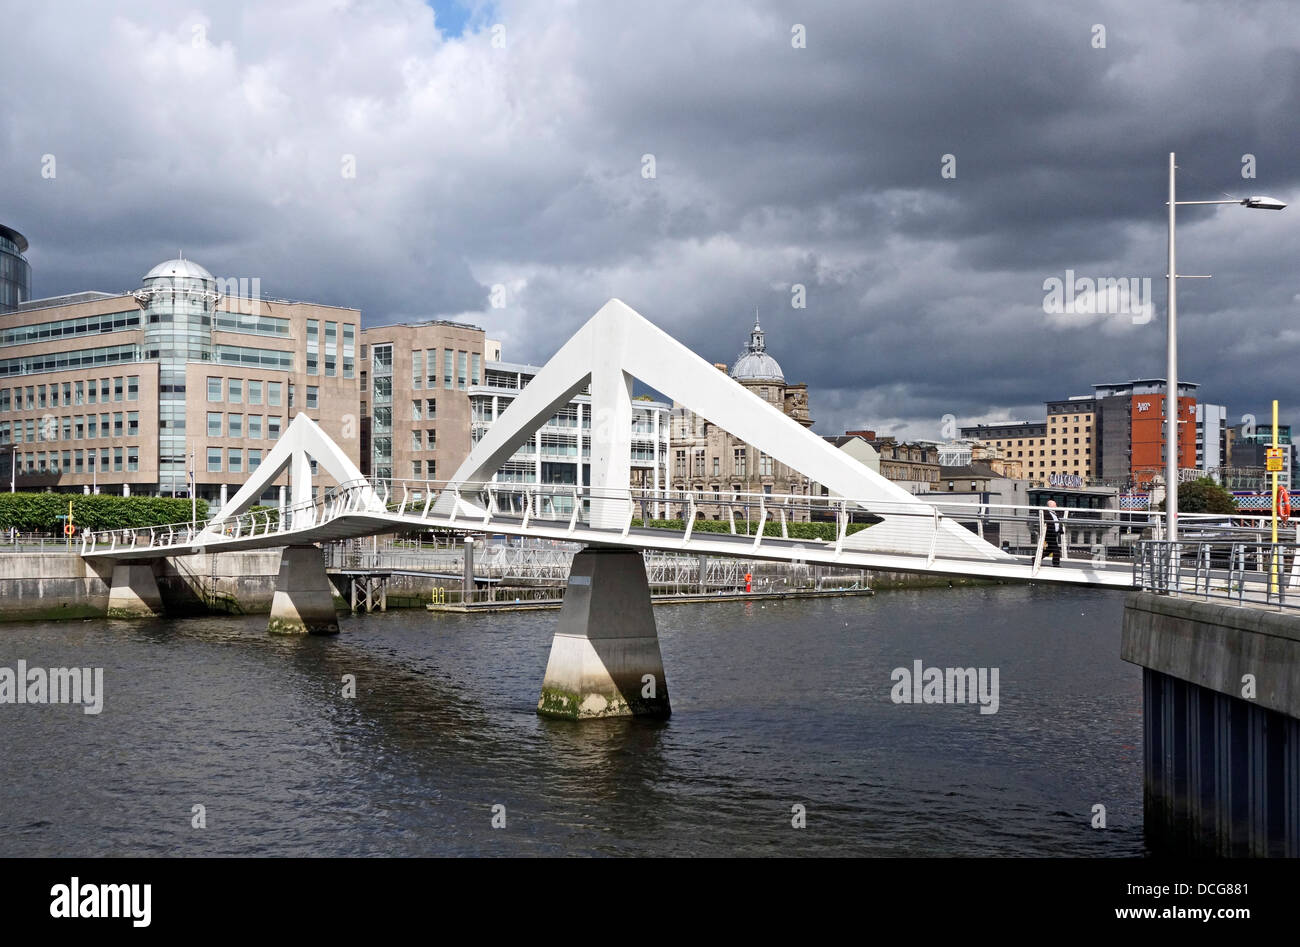 The pedestrian Broomielaw-Tradeston Bridge across River Clyde in Glasgow Scotland also affectionately named 'Squiggly Bridge' Stock Photo